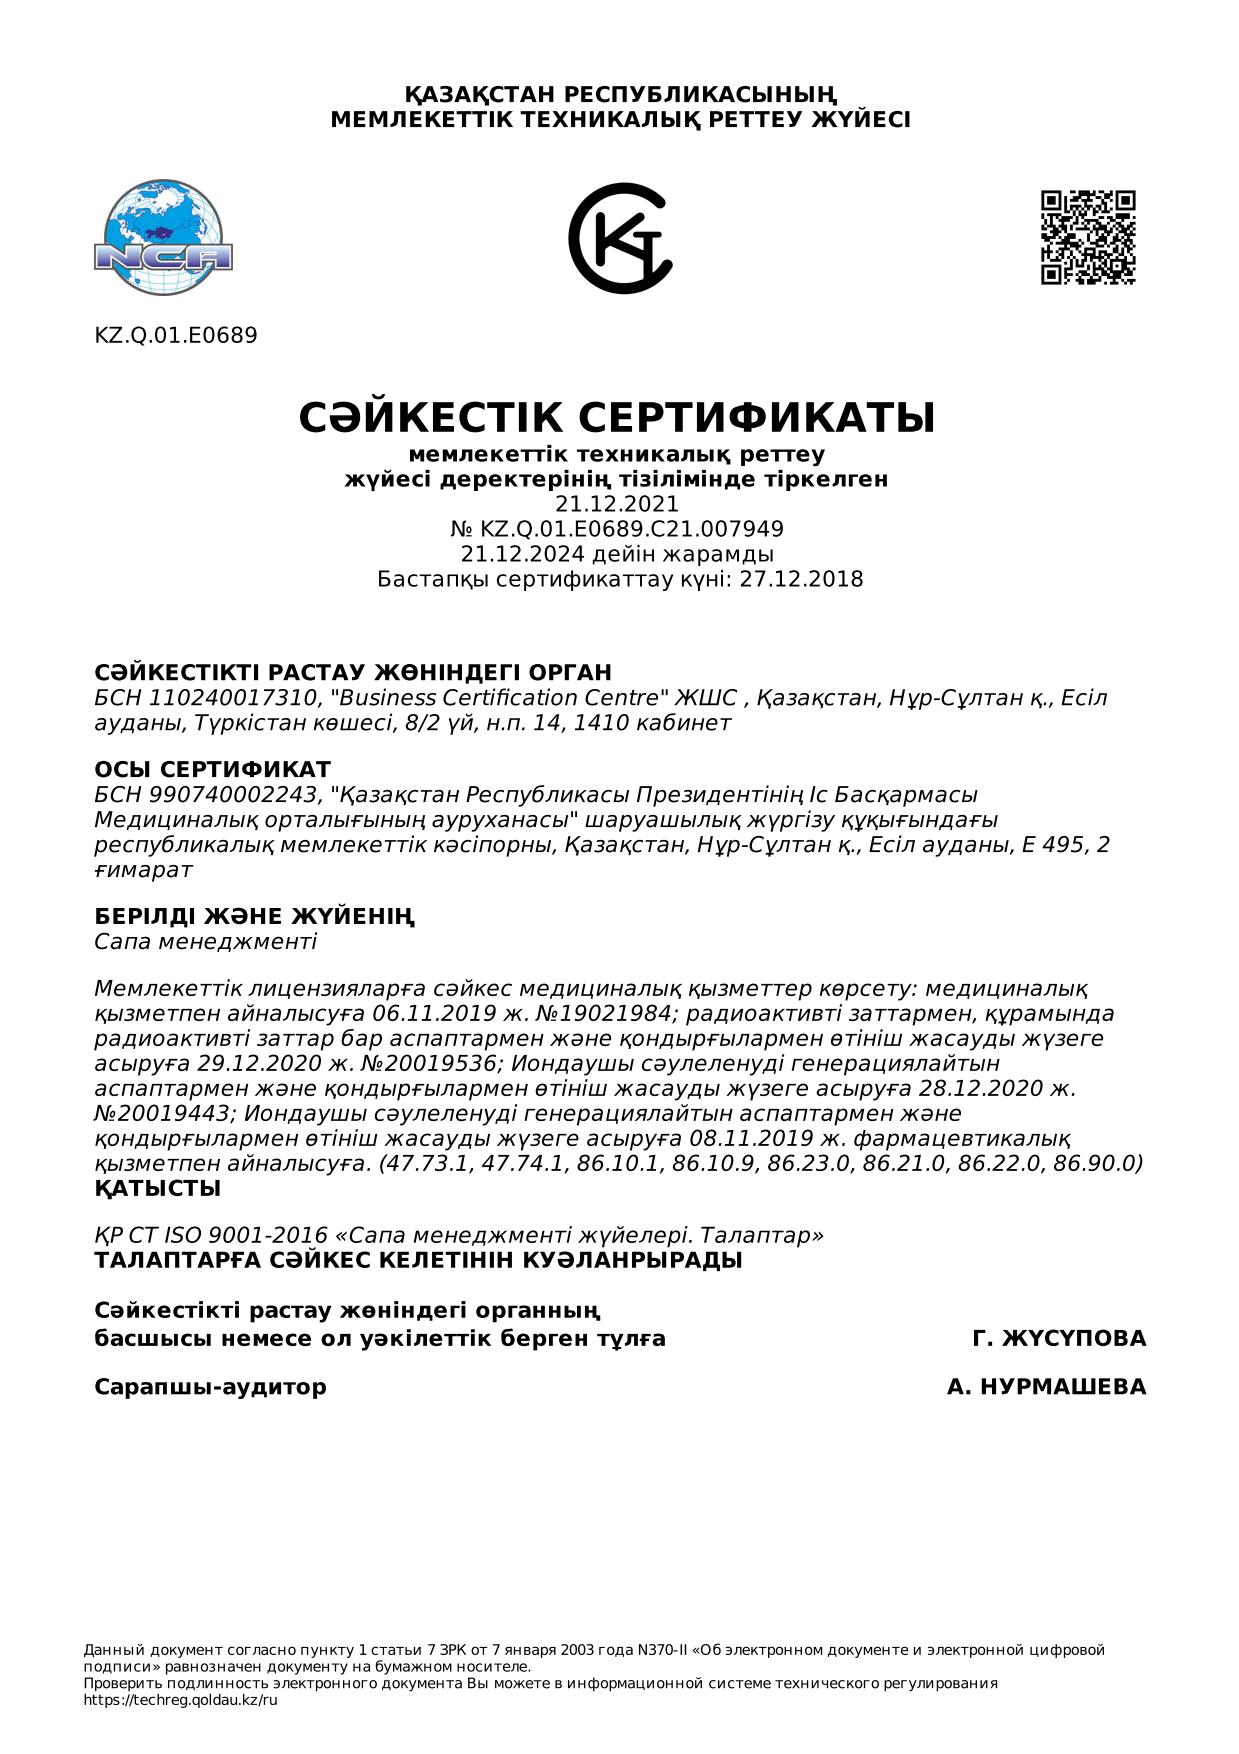 ҚР СТ ISO 9001-2016 Сәйкестік сертификаты